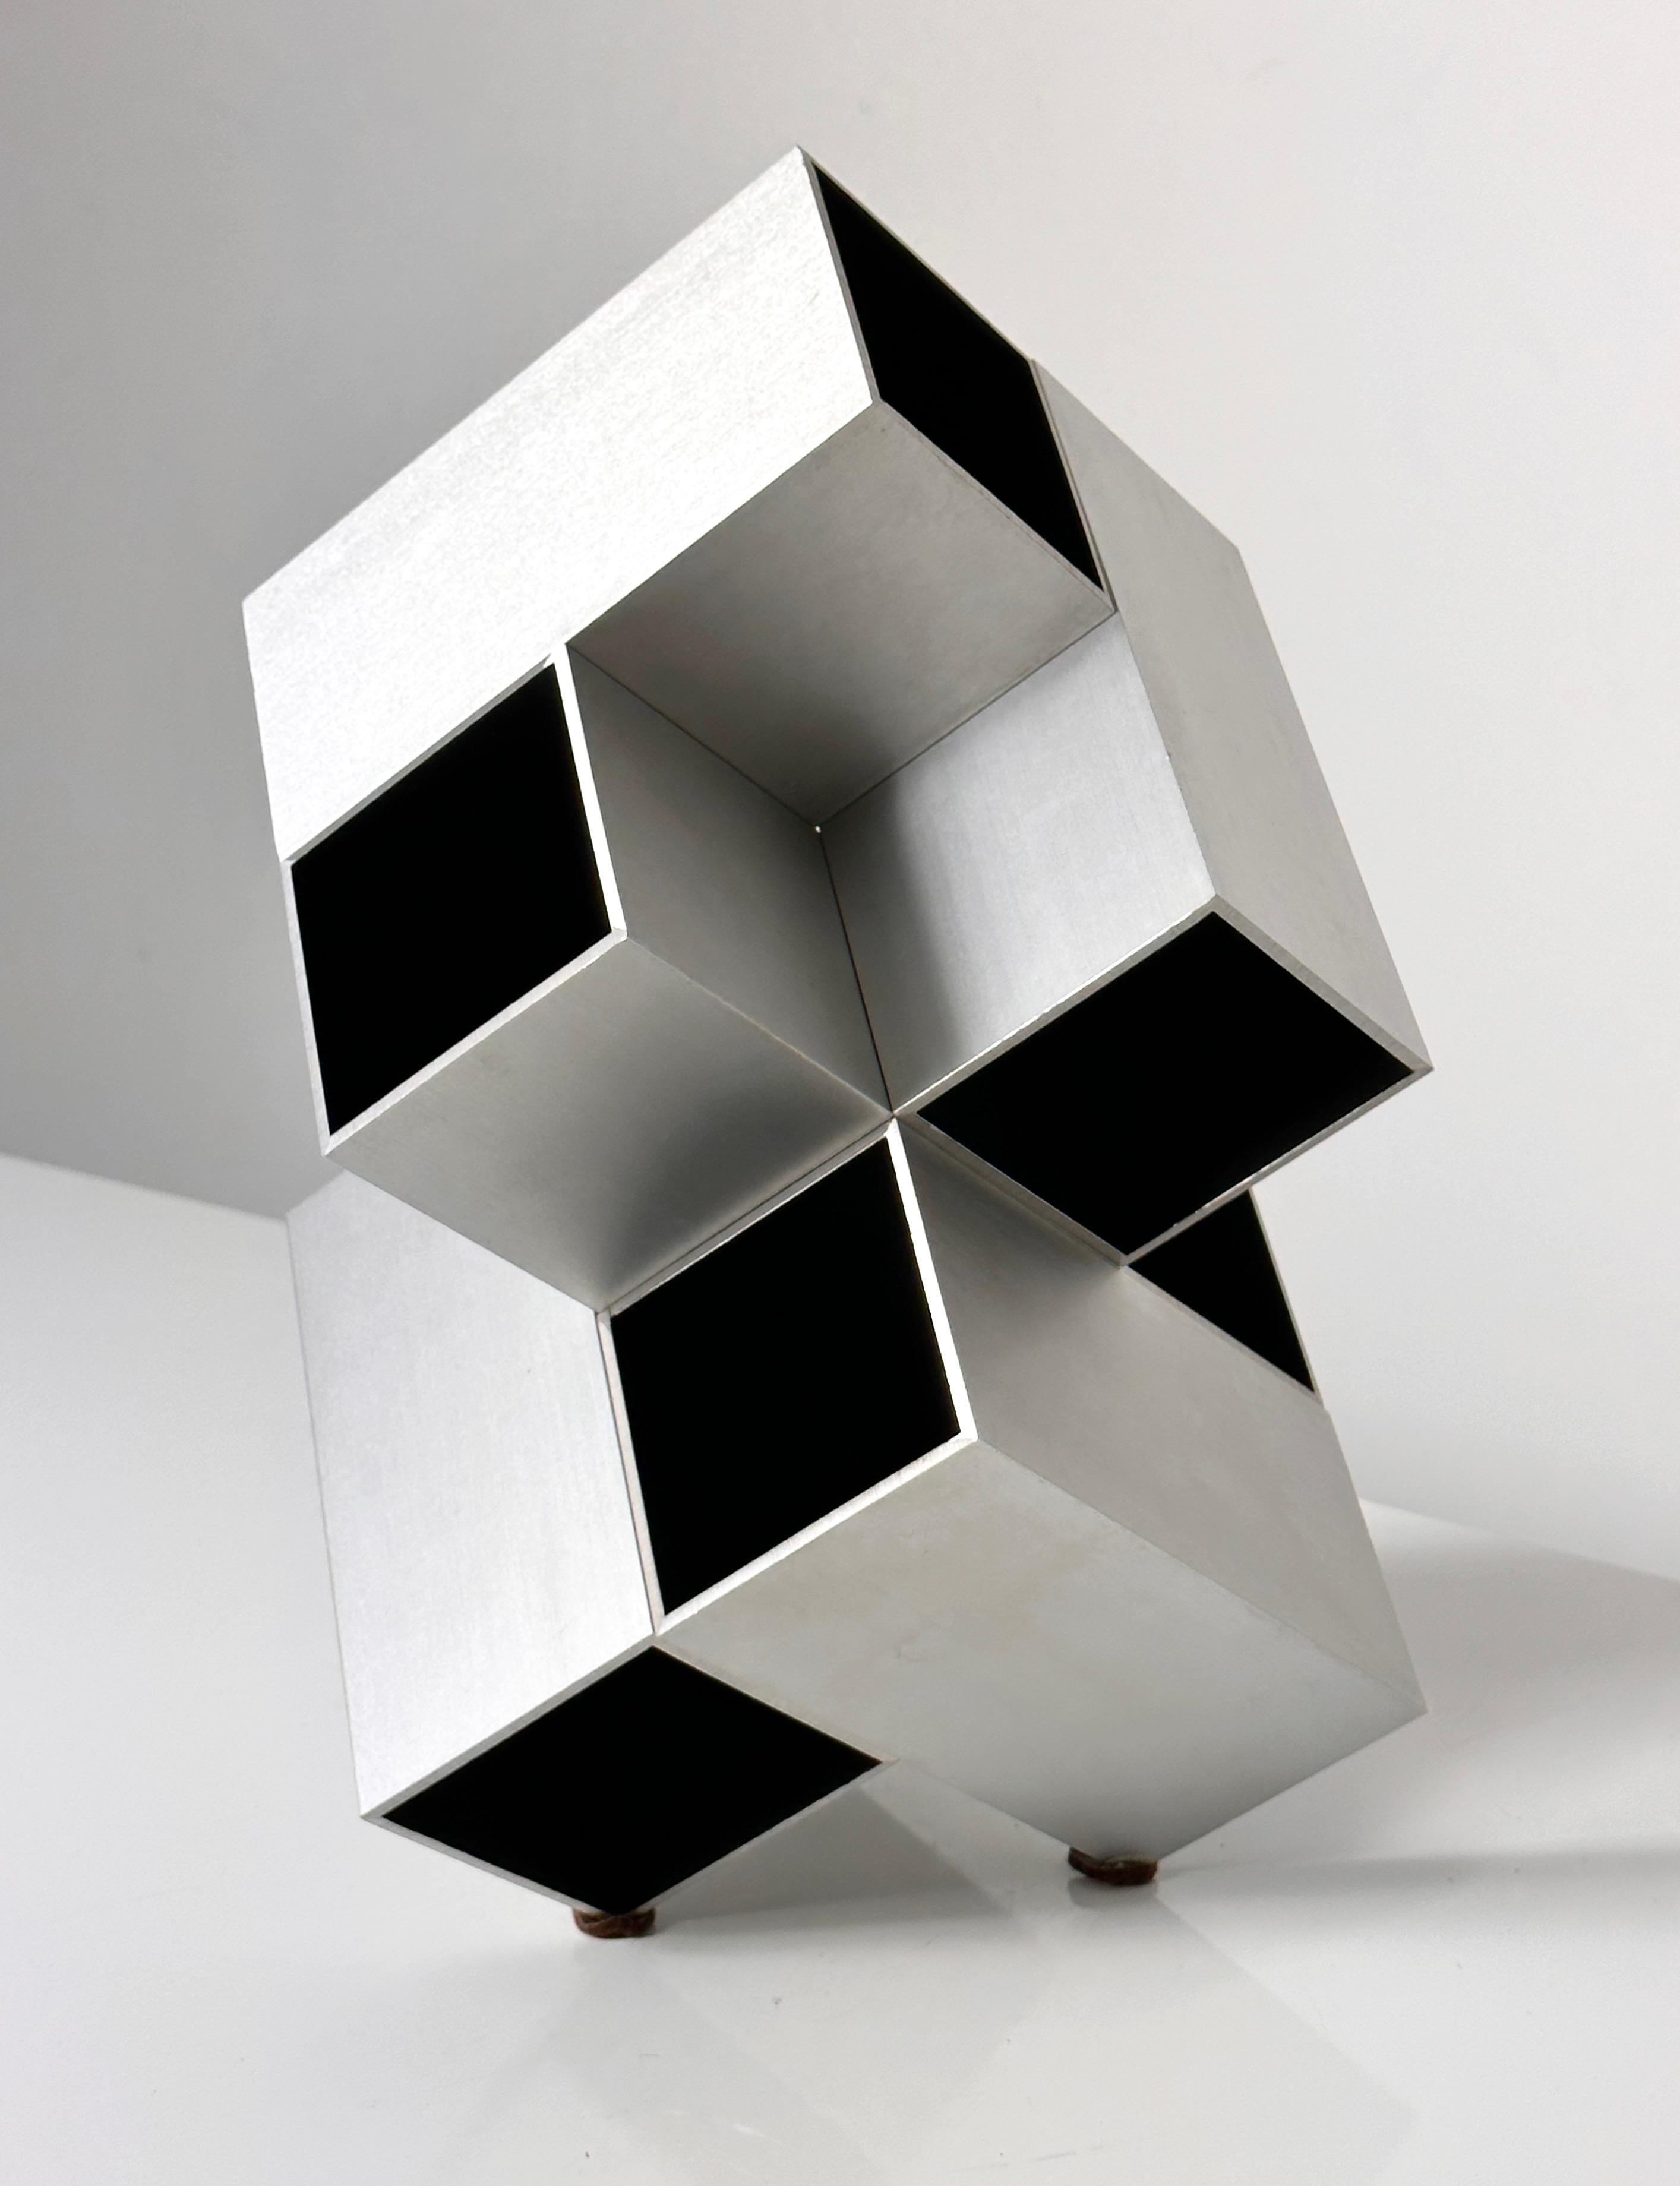 Mid-Century Modern Sculpture cubique de Kosso Eloul, artiste israélien 1920-1995 Toronto, Canada 